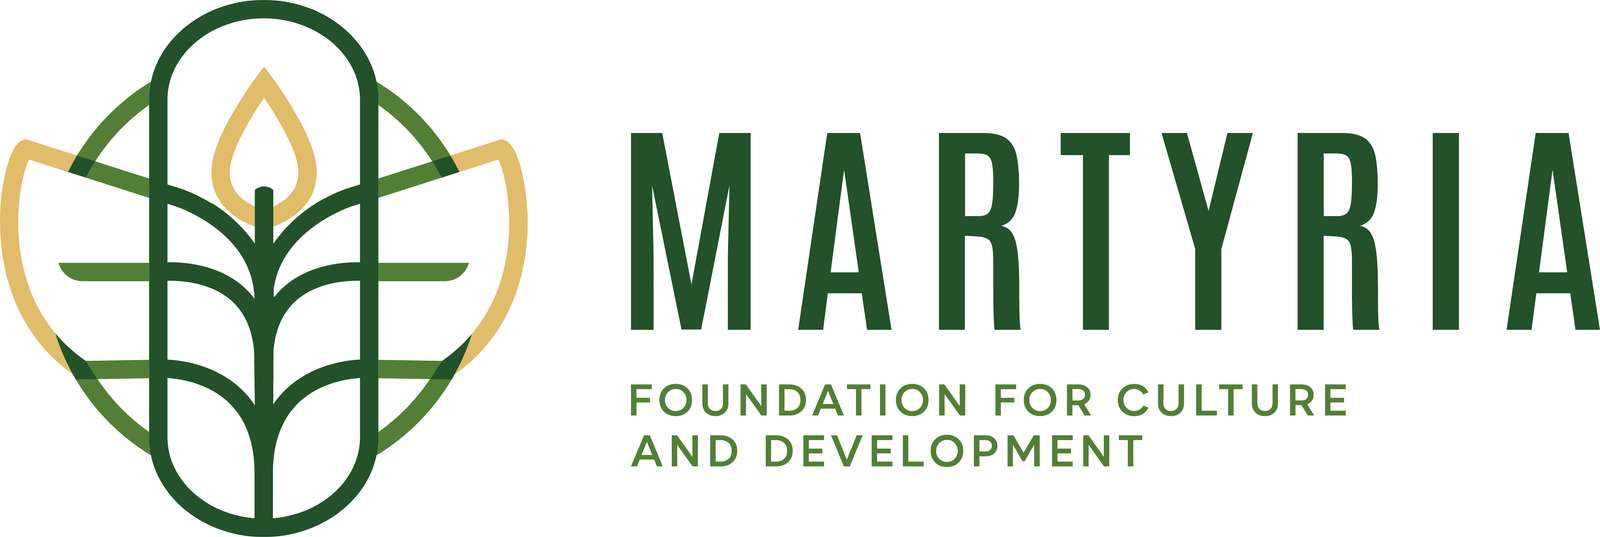 Логотип Martyria 43fdgy пазл онлайн из фото